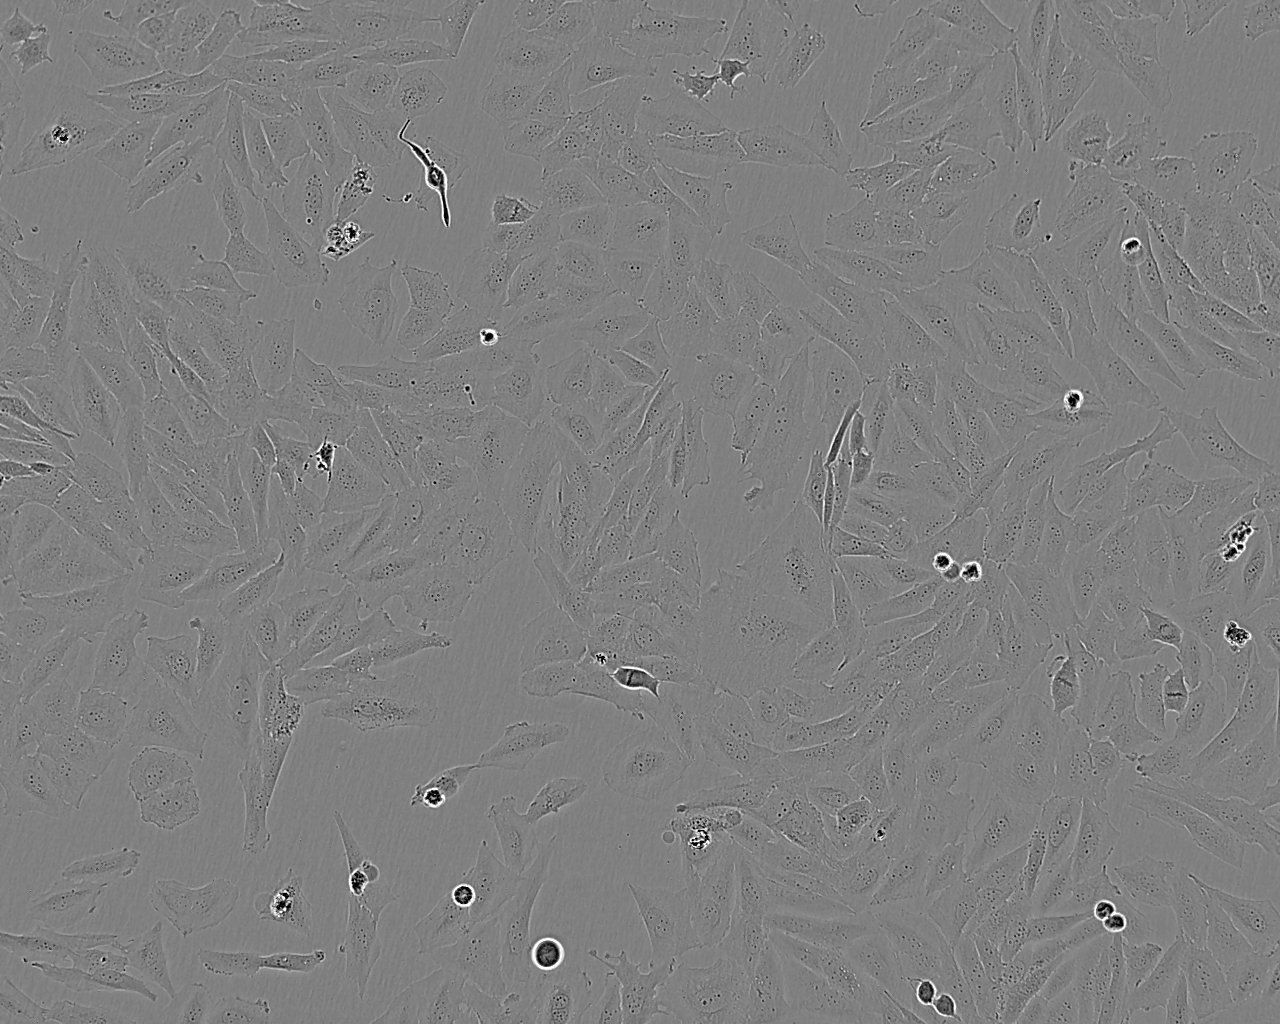 MDCK-II epithelioid cells犬肾细胞系